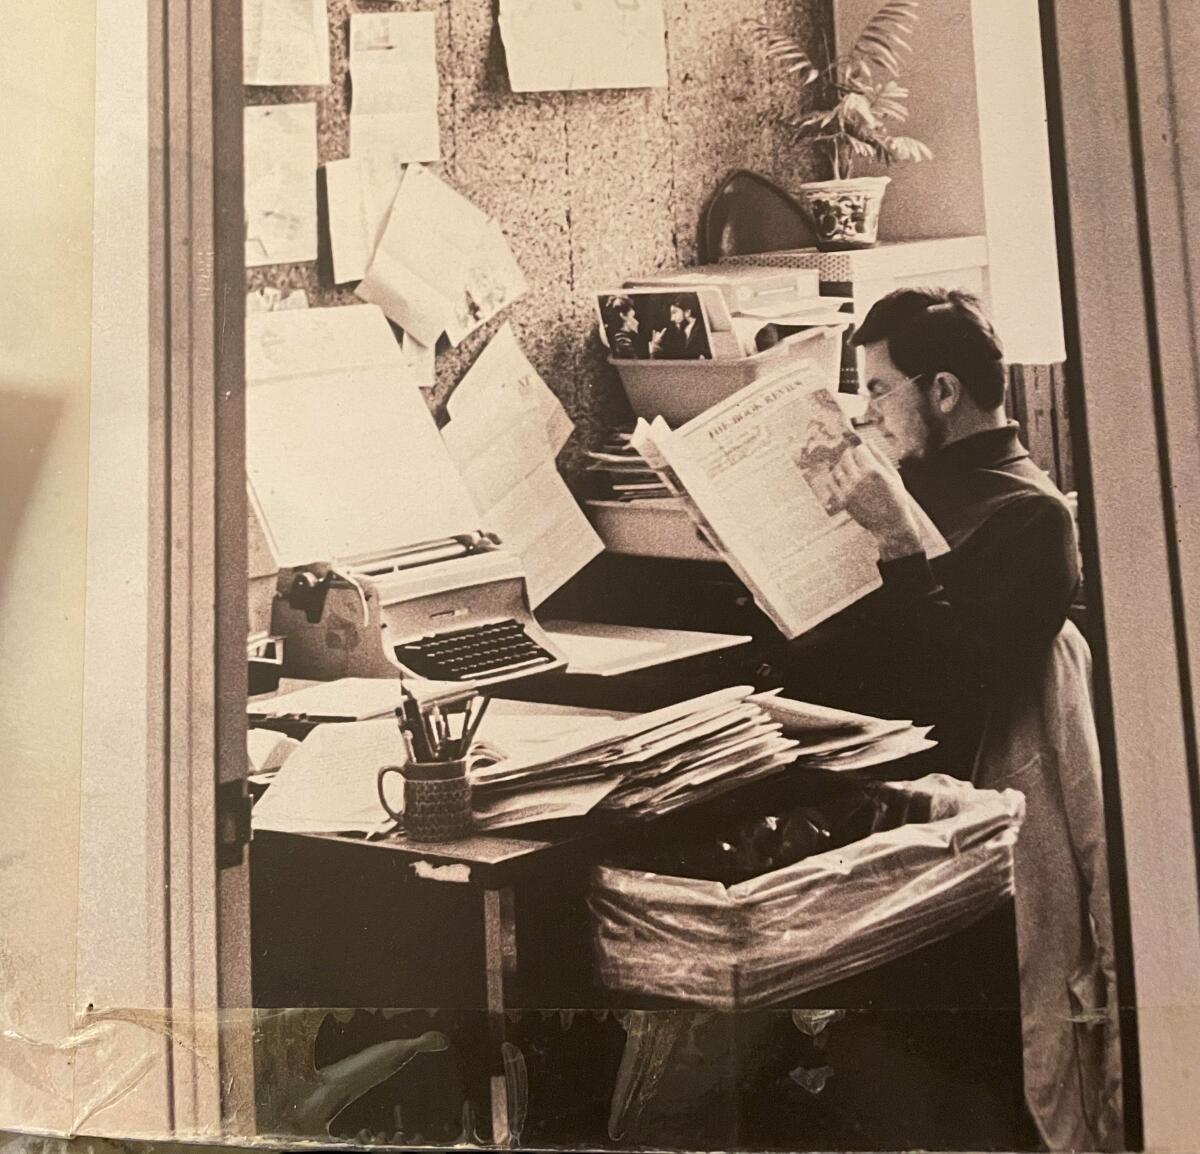 A man sits at a work desk reading a newspaper.